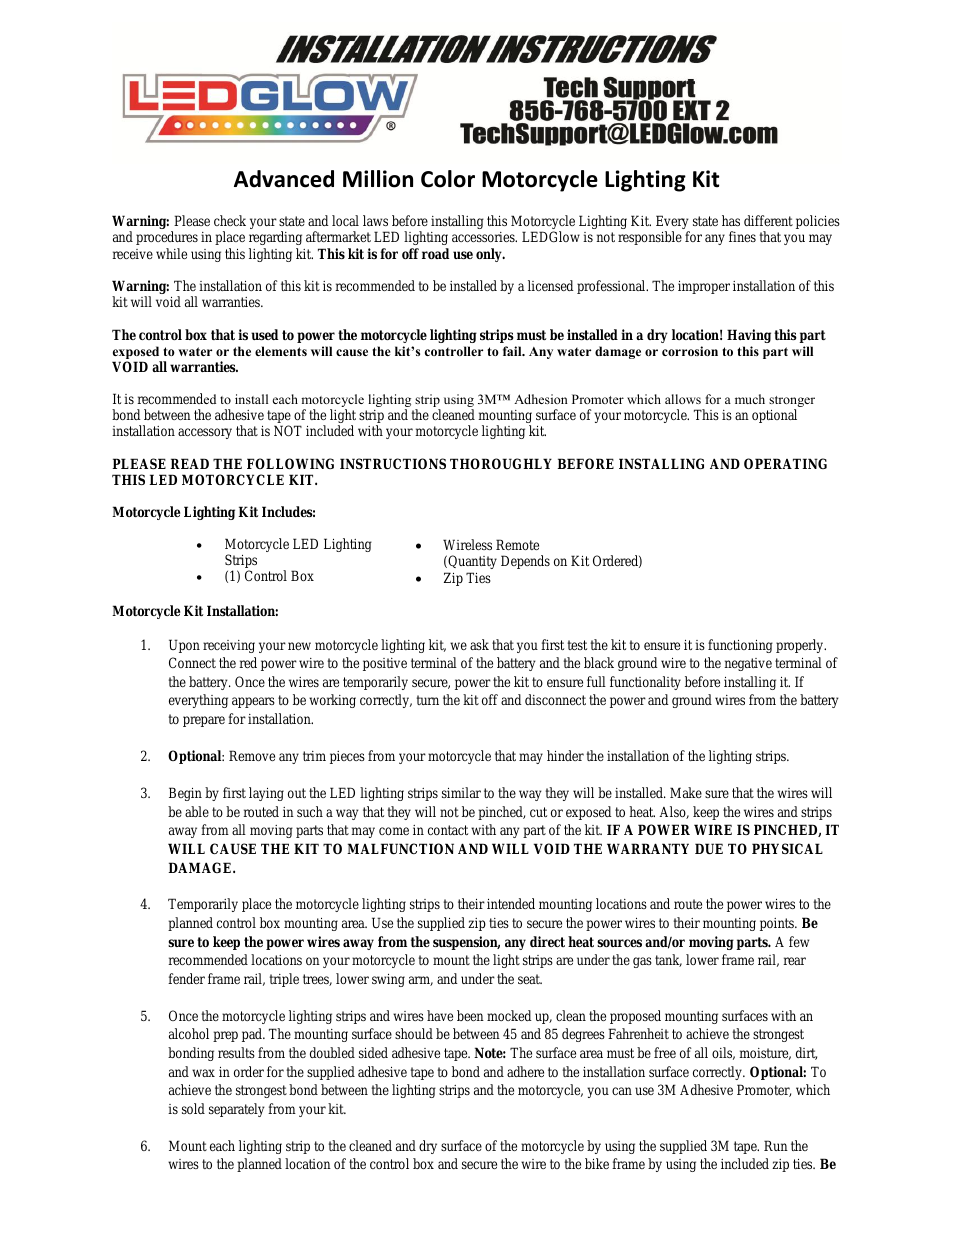 Advanced Million Color Flexible Motorcycle Light Kit